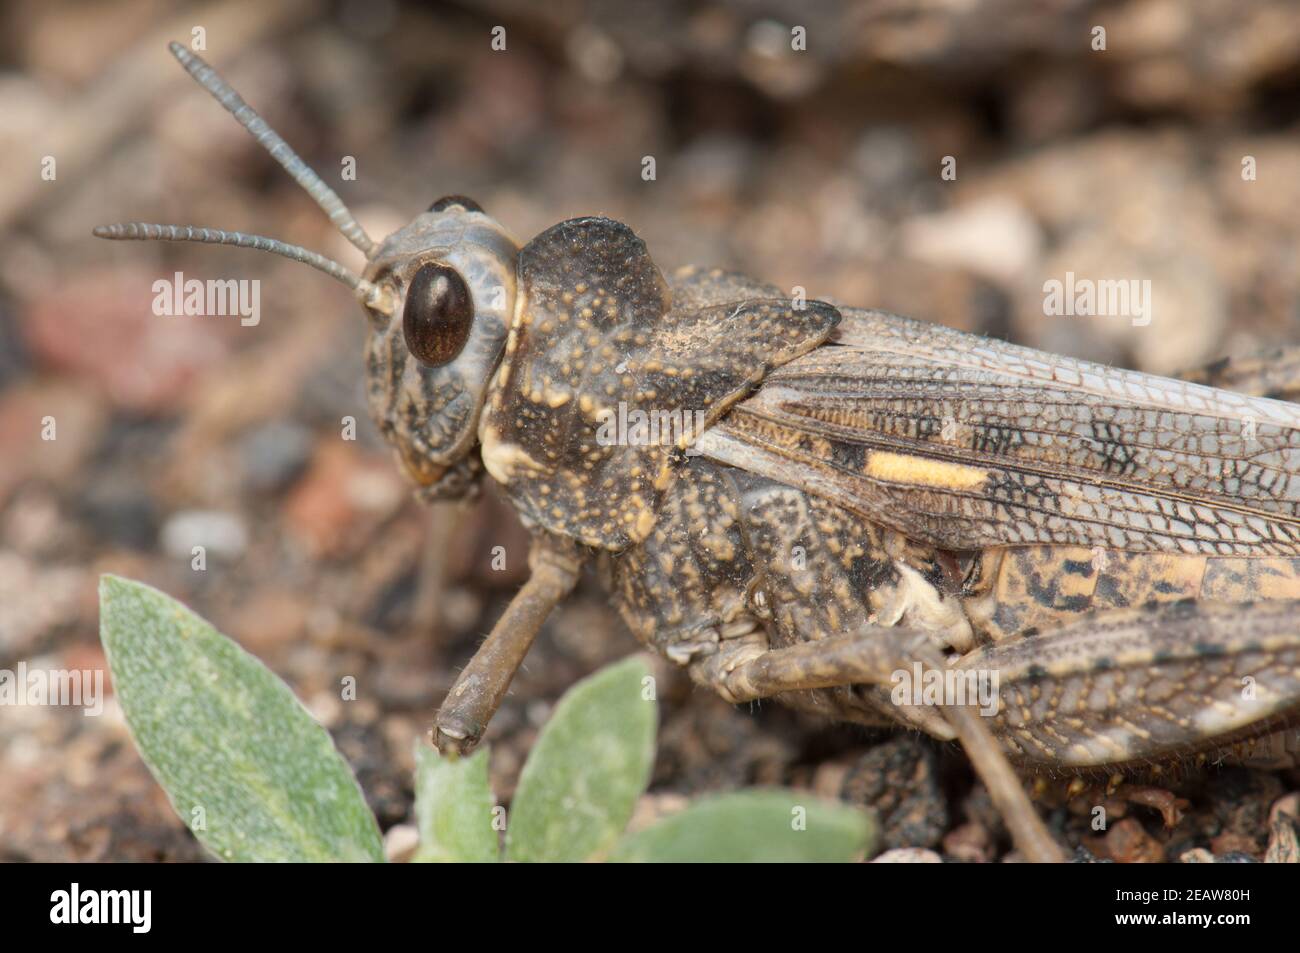 Grasshopper in the municipality of Arrecife. Stock Photo